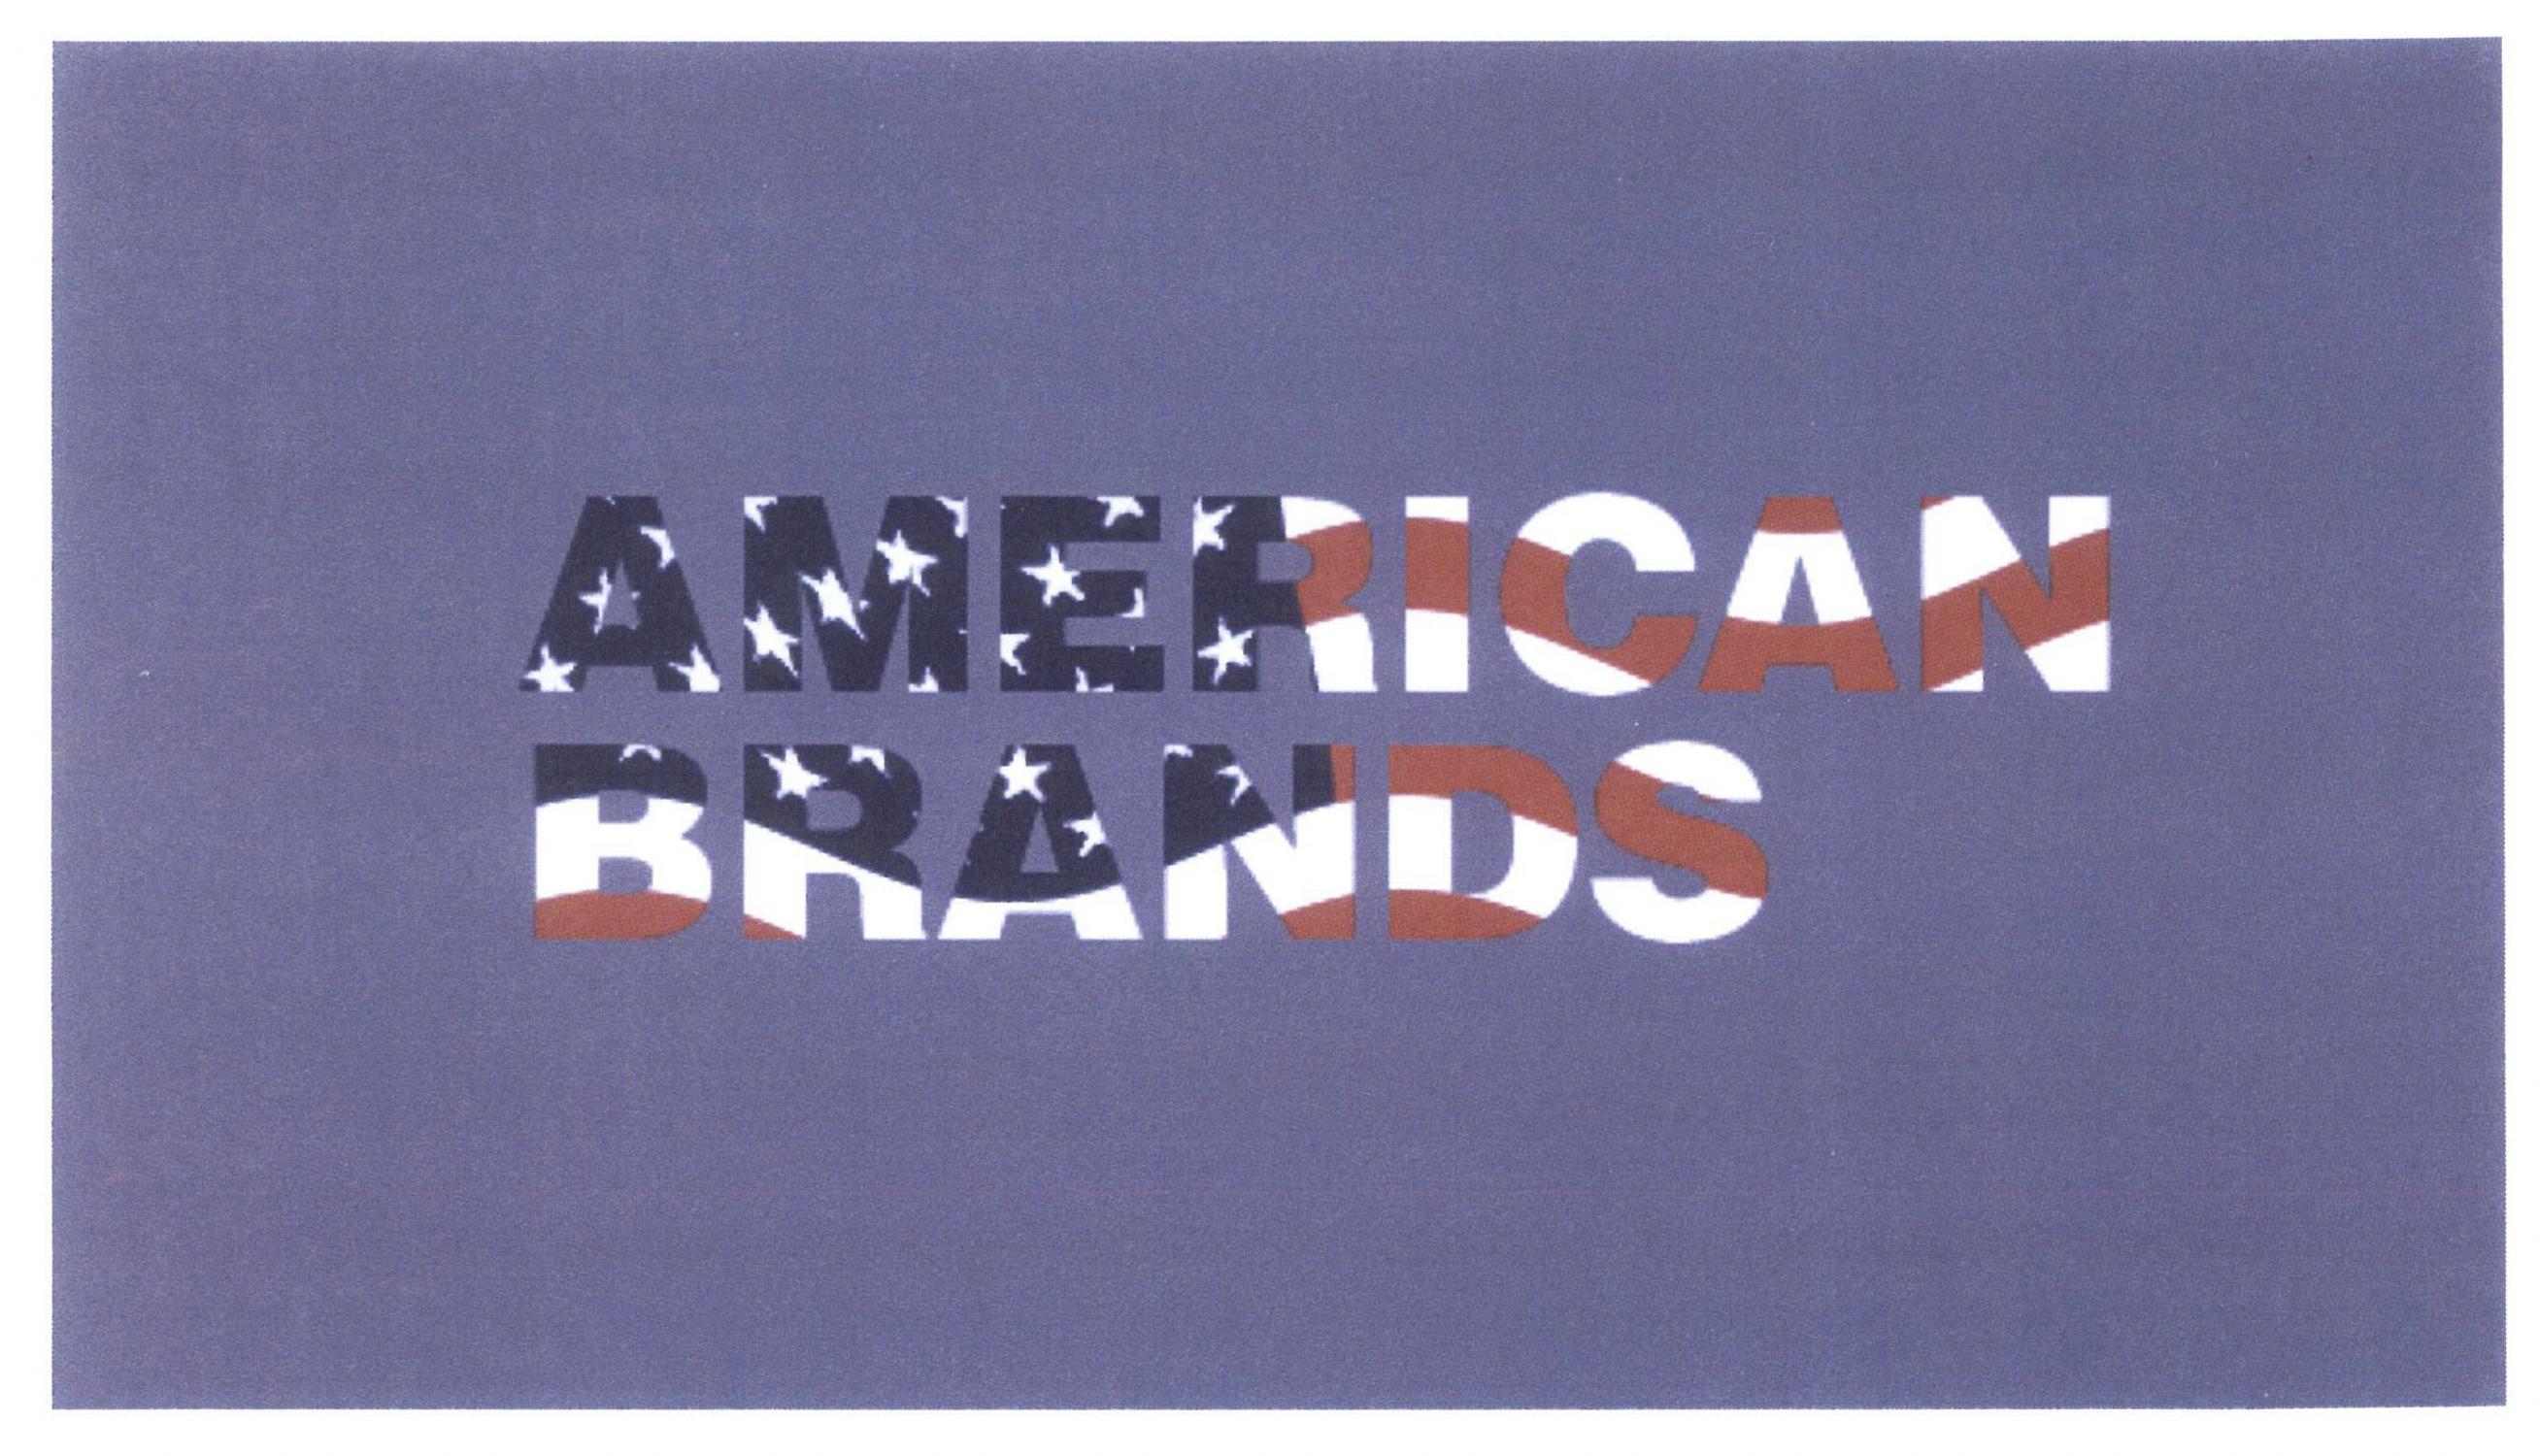 Trademark Logo AMERICAN BRANDS